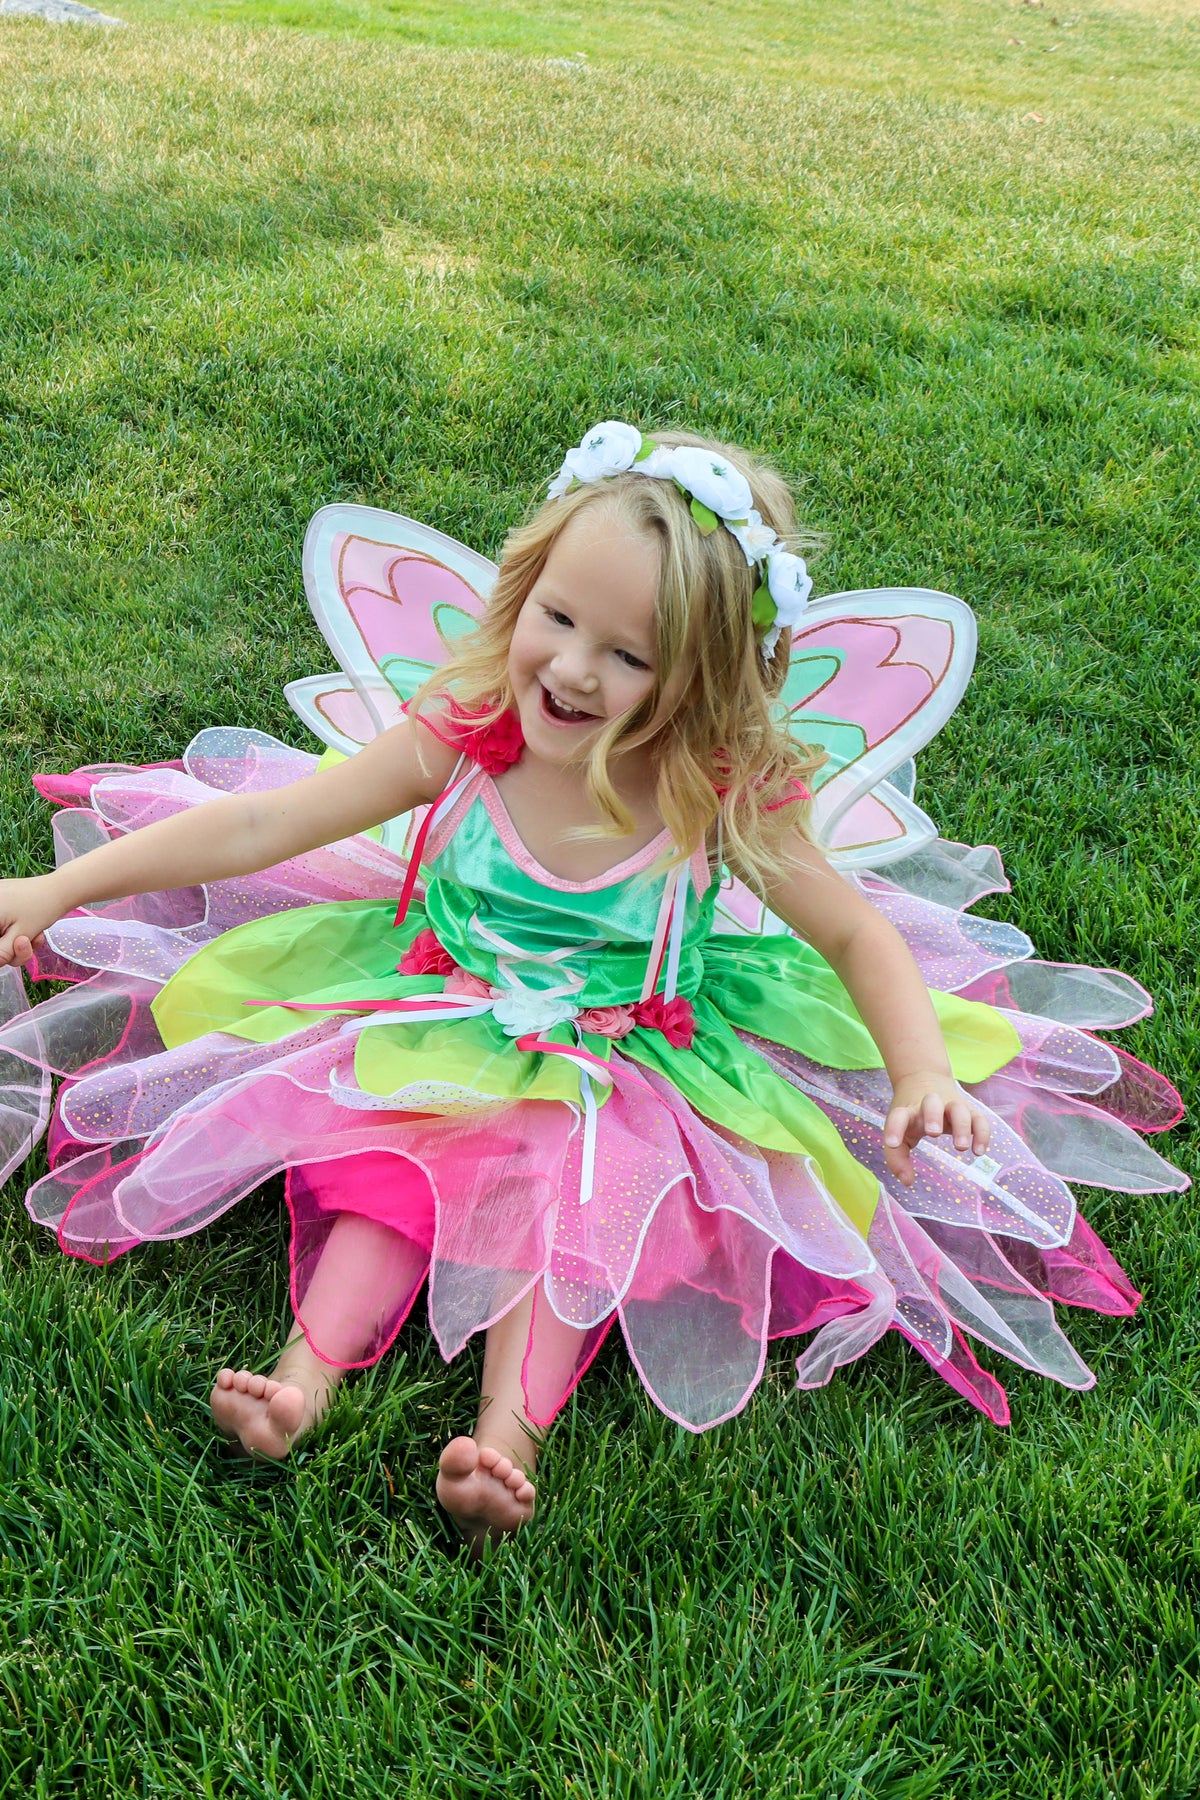 Little Adventures Fairy Wings Pink